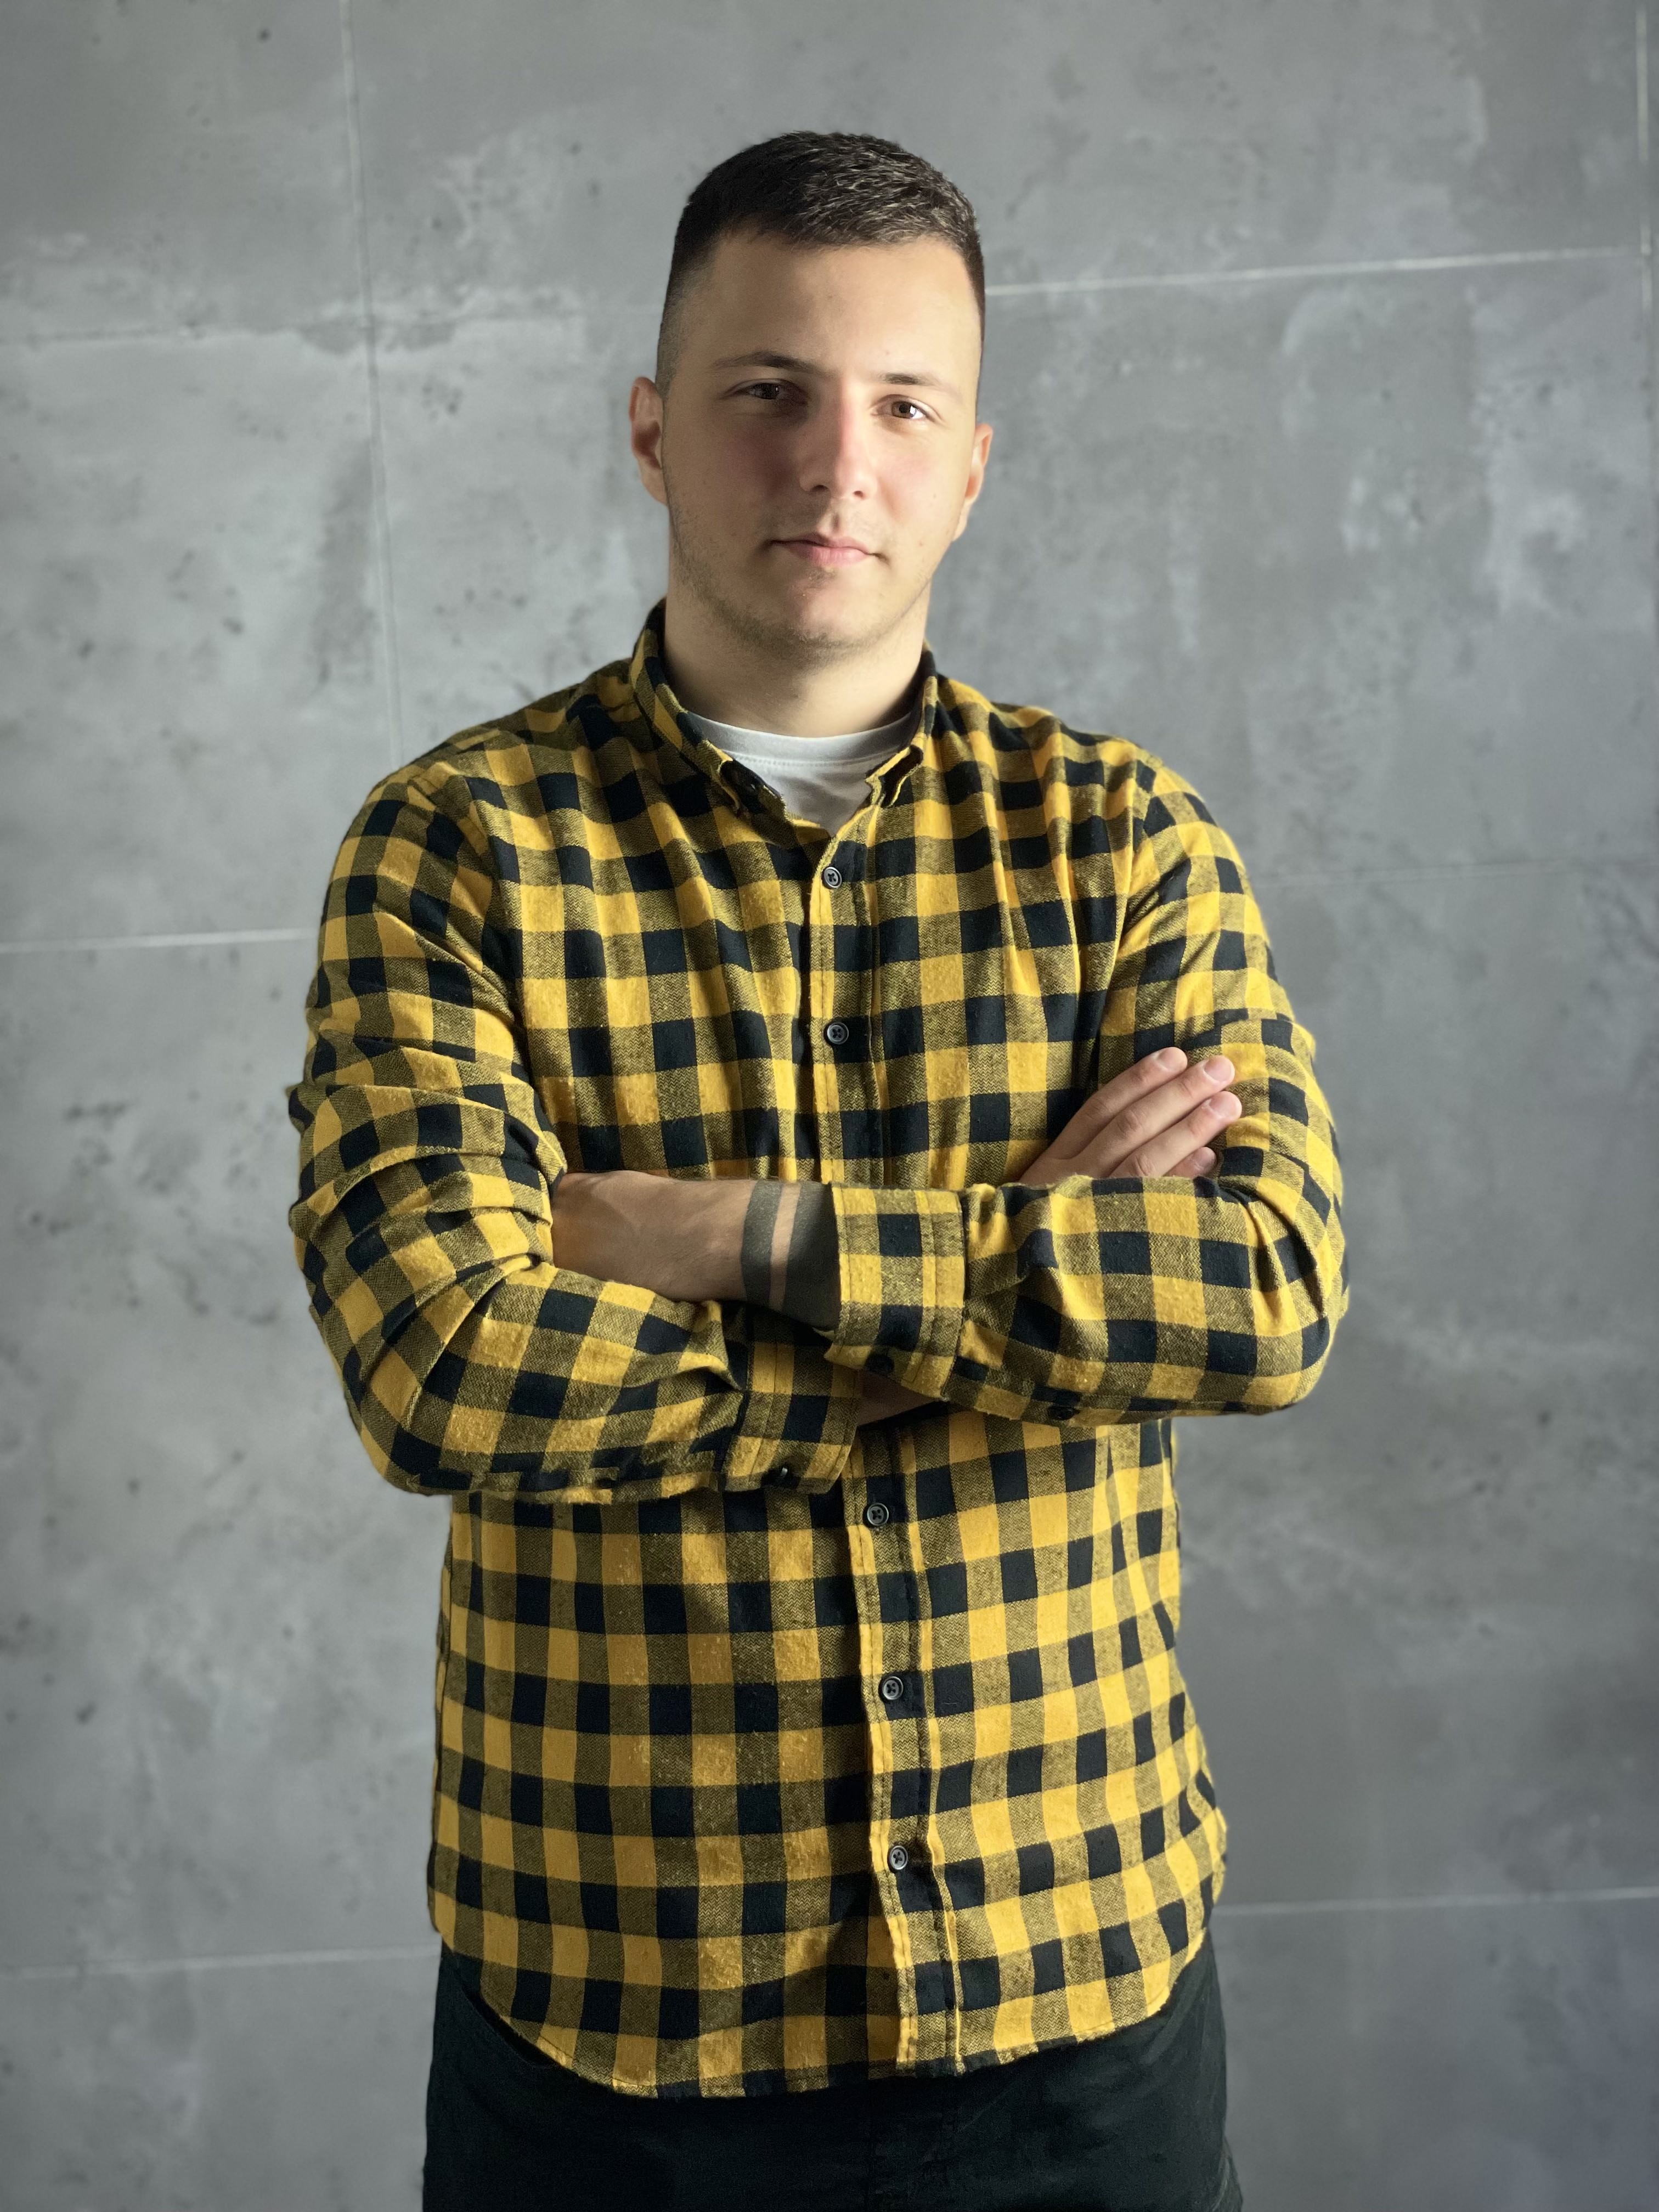 Jovan Ivkovic - Freelance Web Developer & Designer